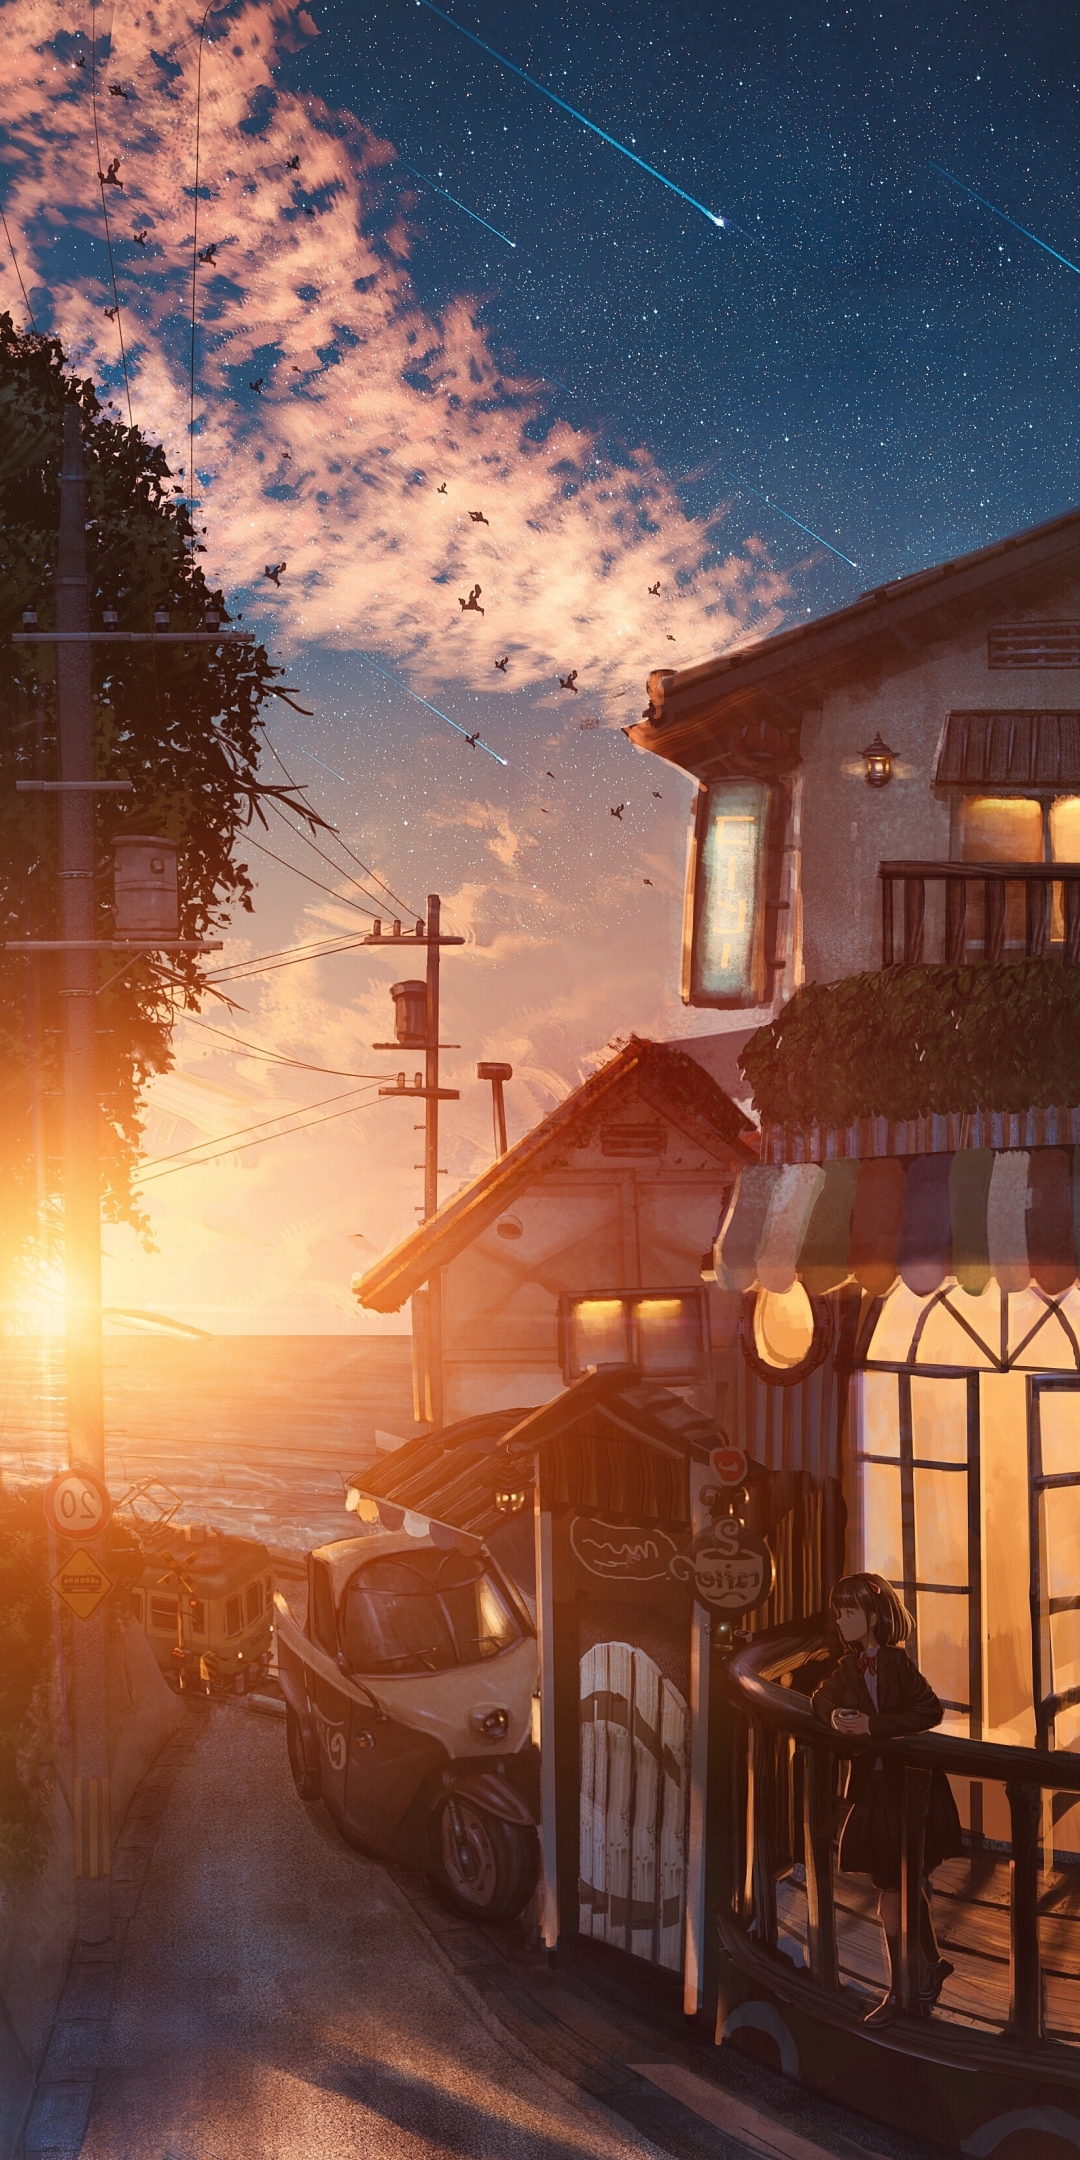 Wallpaper Clouds, Anime Landscape, Scenery, Sunset, Falling Stars ...